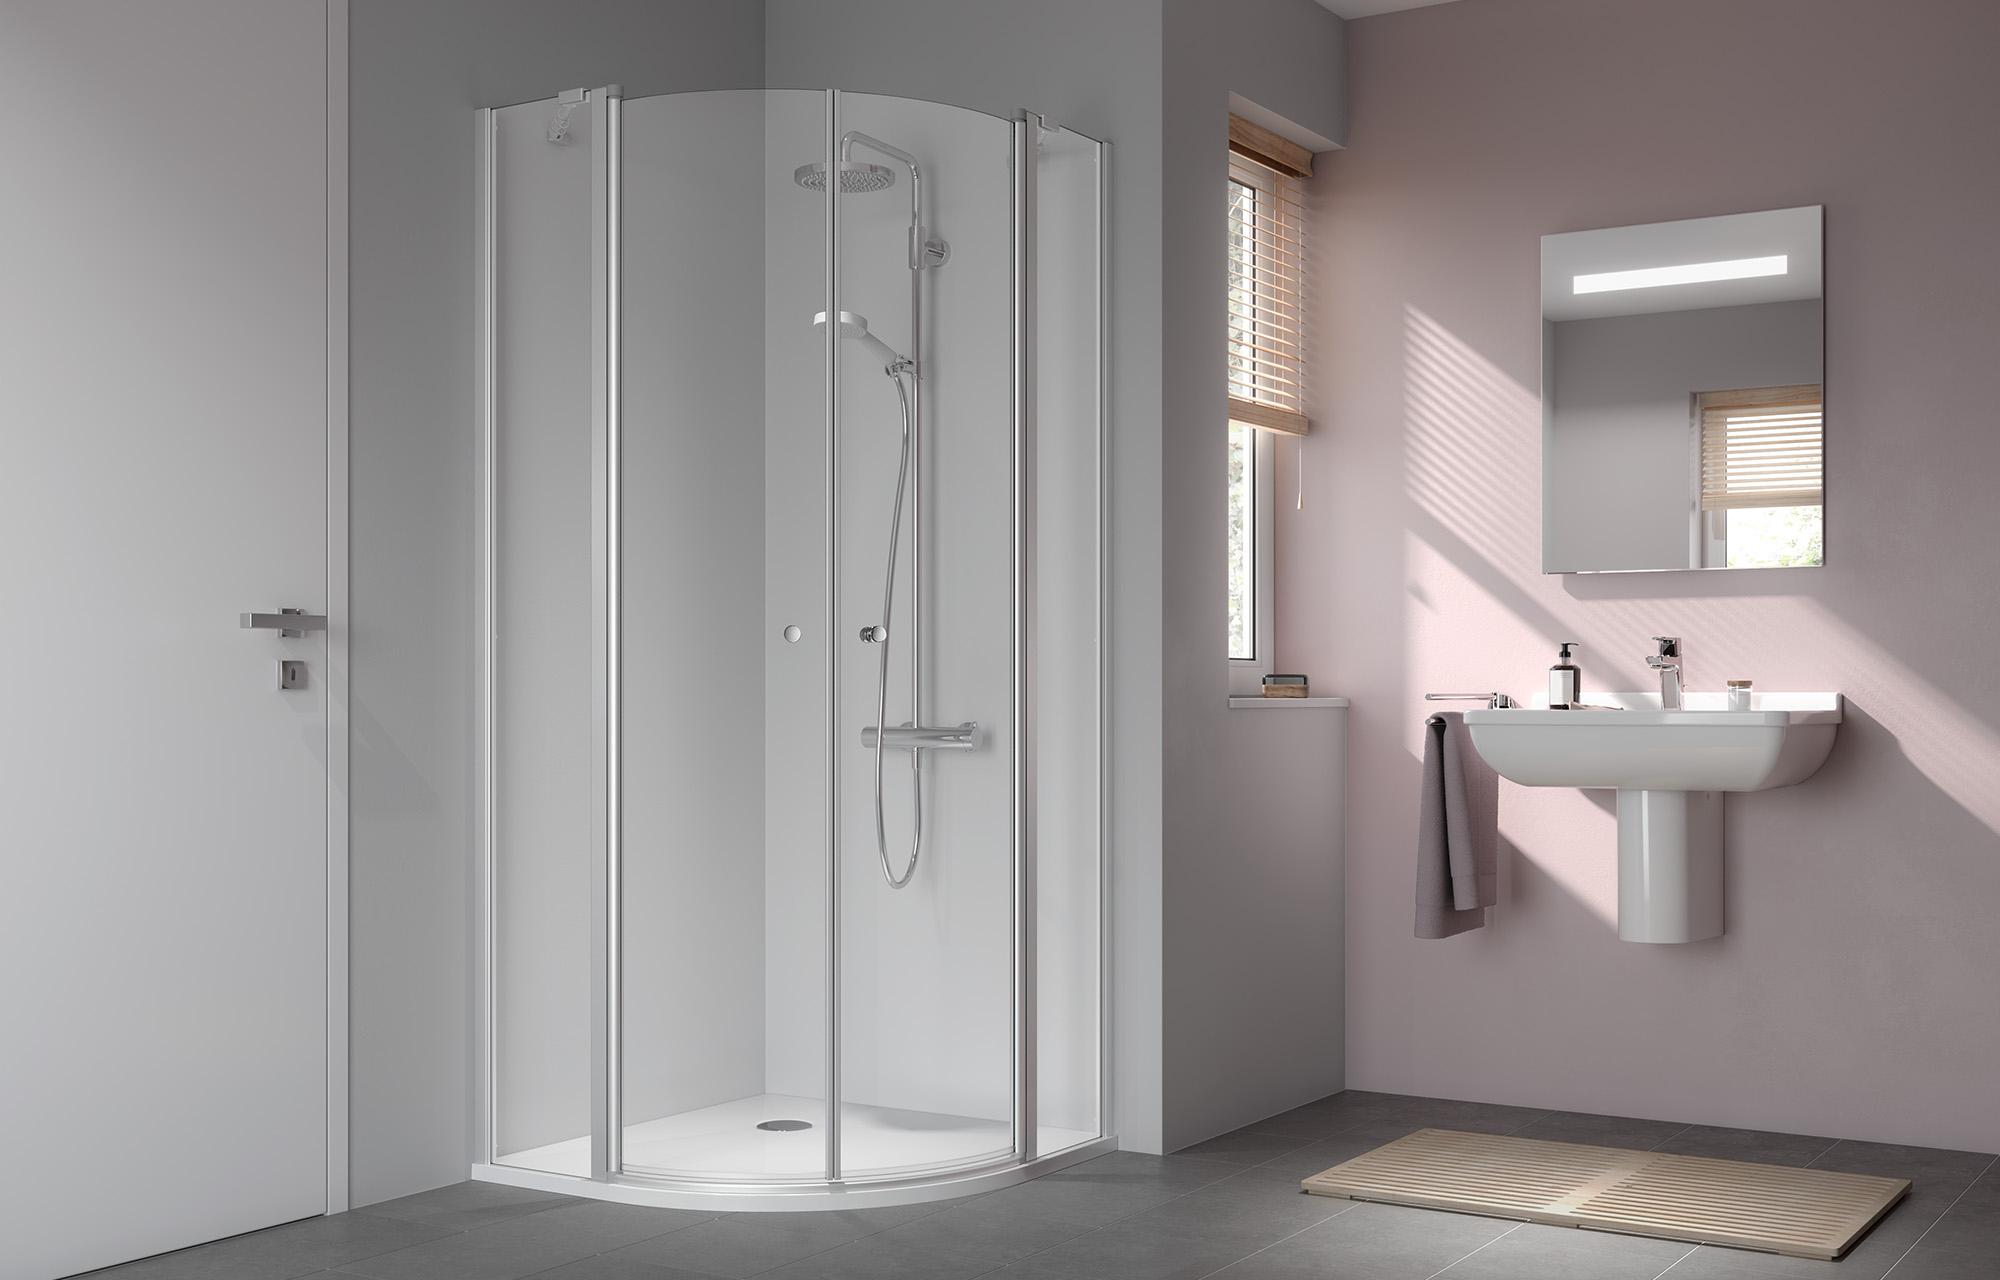 Kermi profile shower enclosure, IBIZA 2000 quadrant shower enclosure (two-part hinged doors with fixed panels)